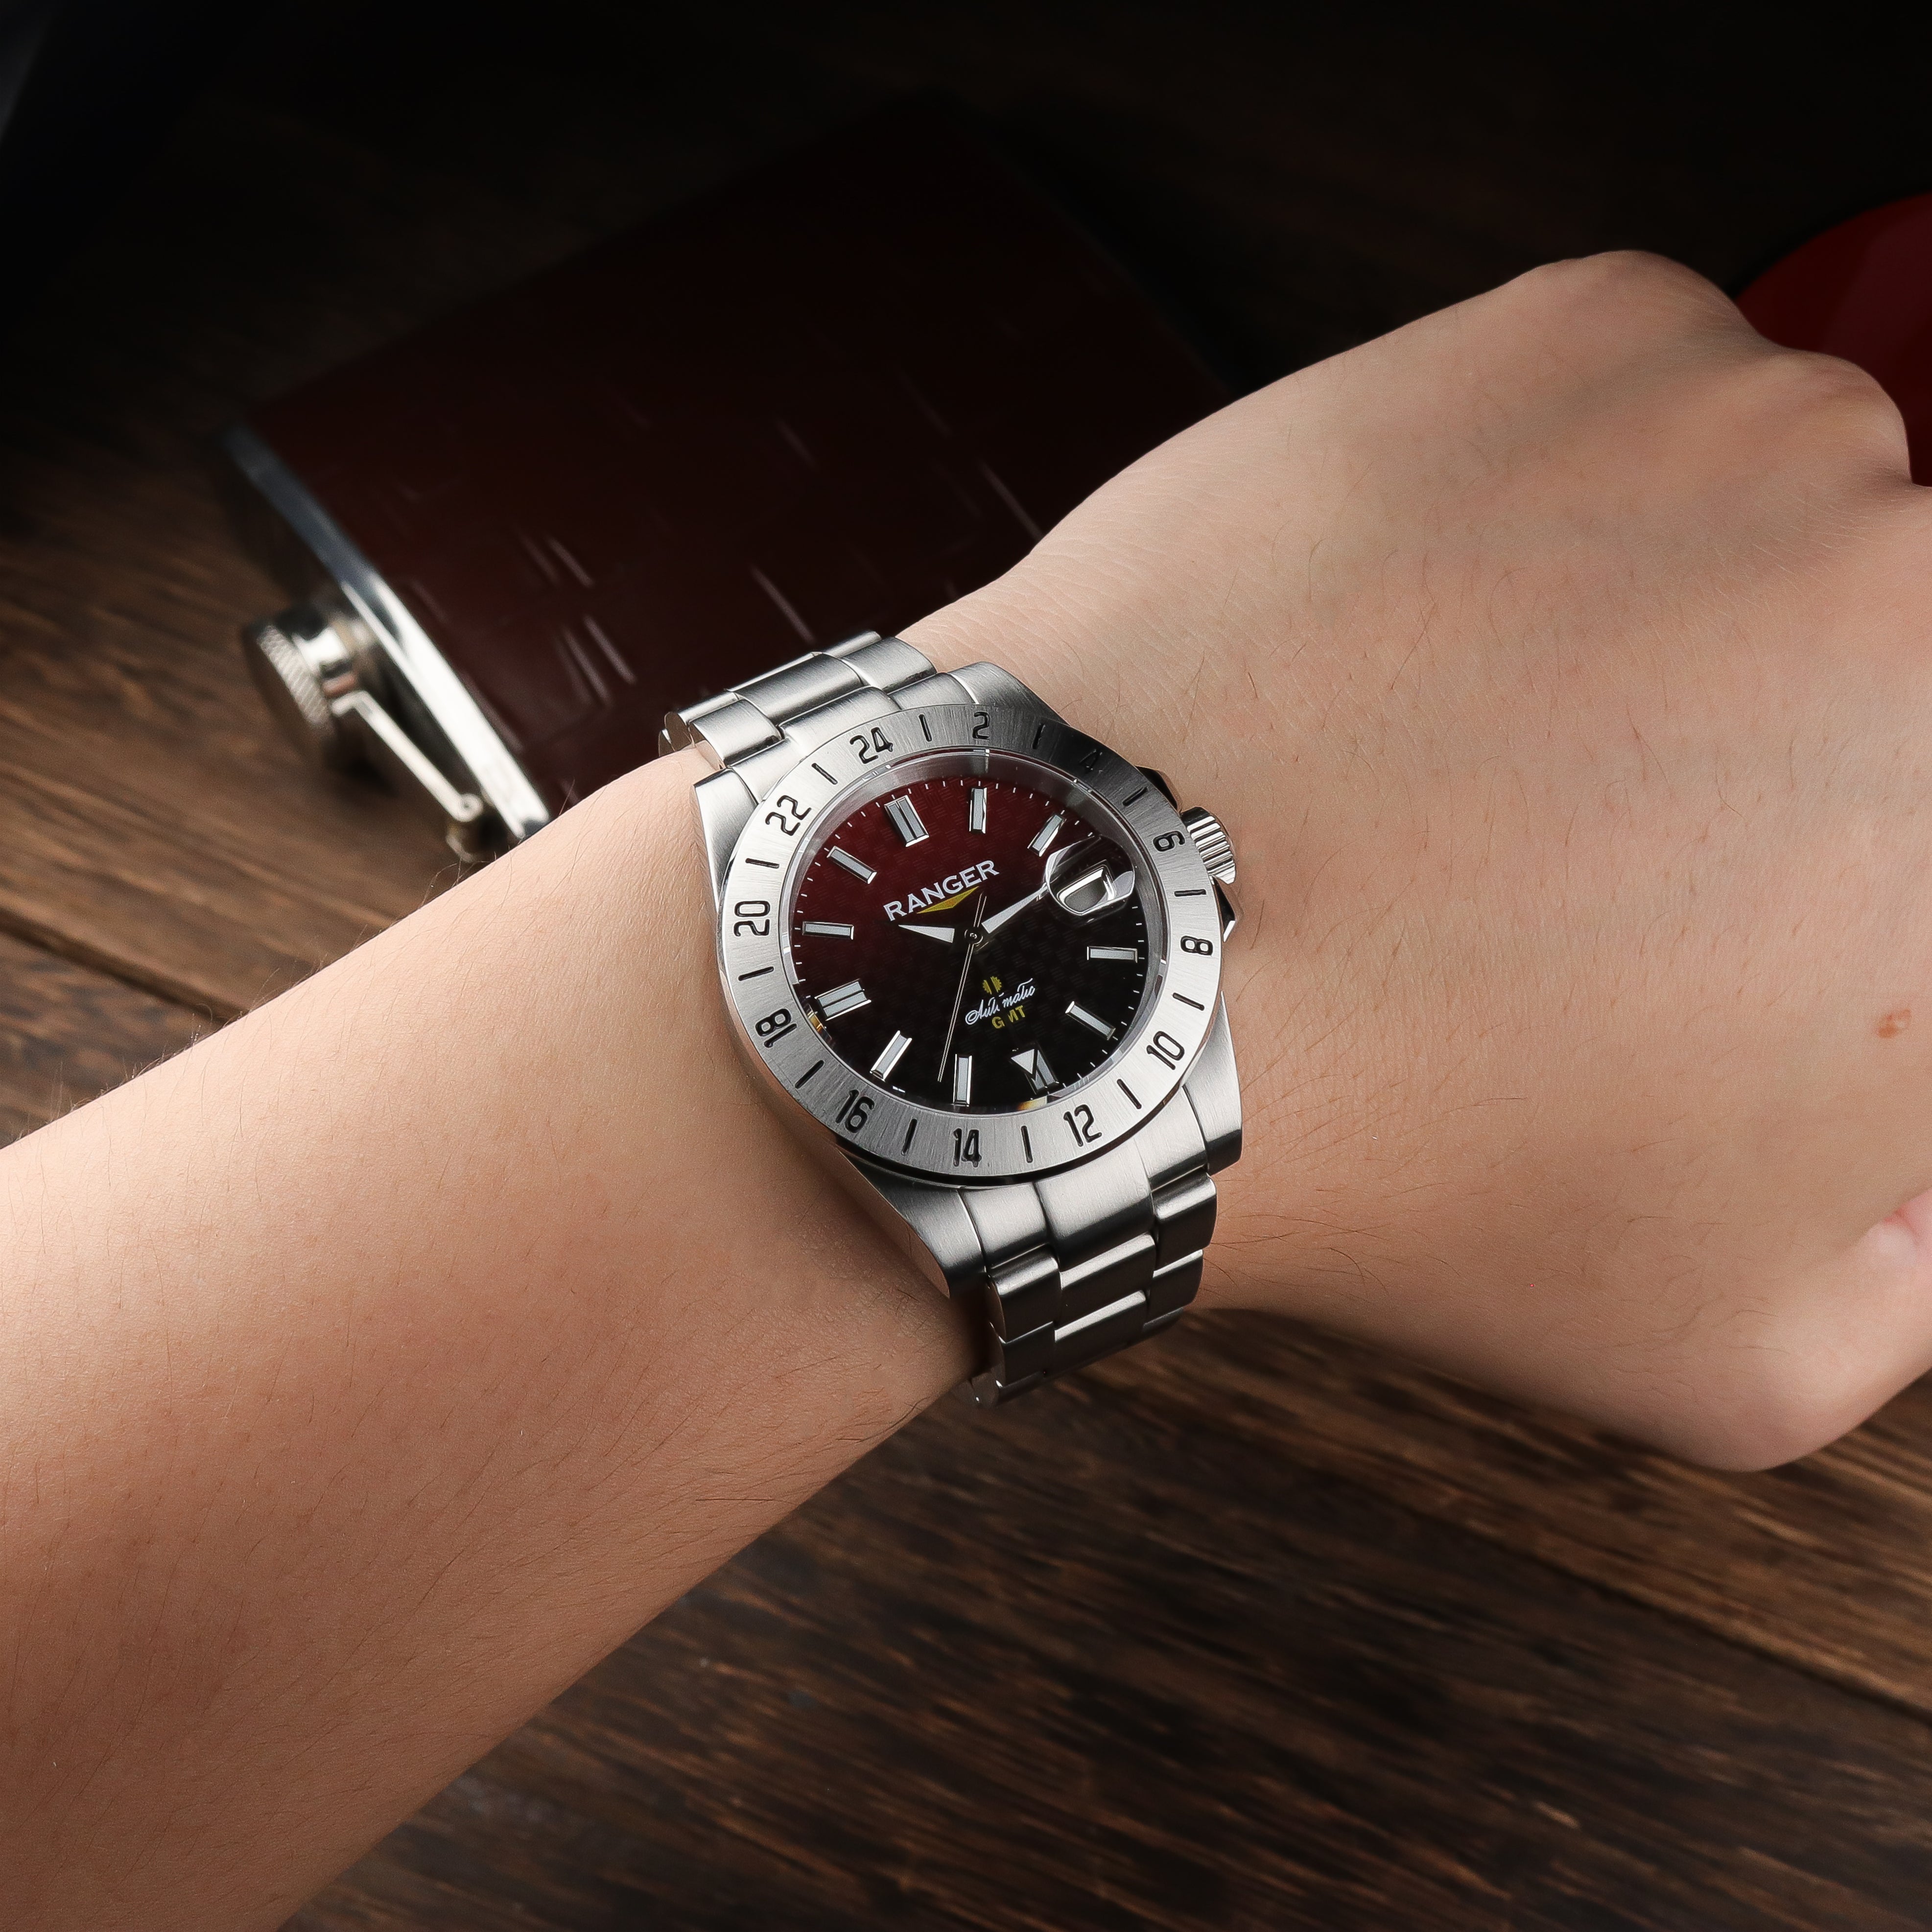 Ranger IV 赤富士 4 手首のショット。GMT自動巻き腕時計の魅力的な腕時計写真